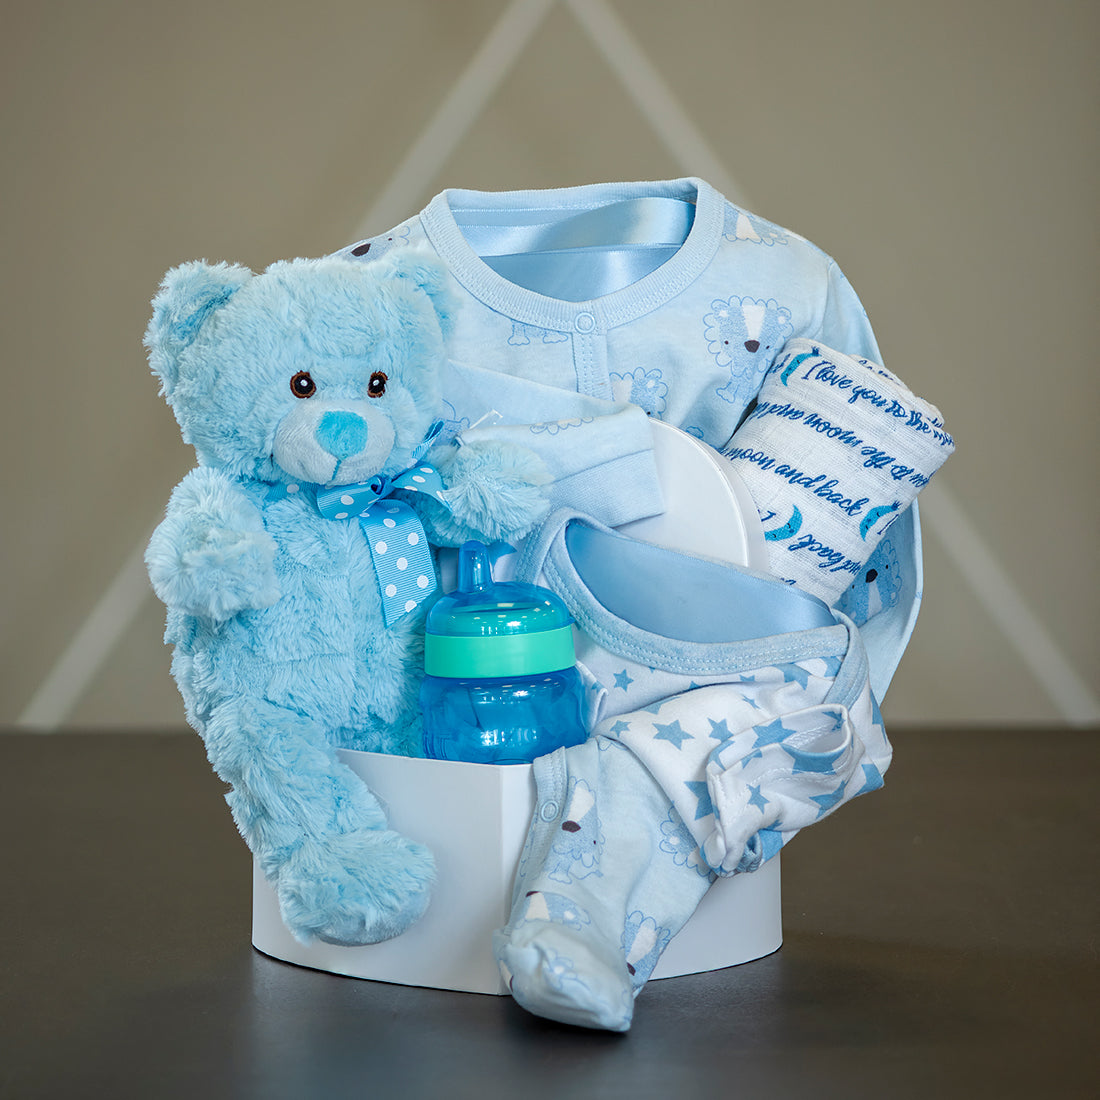 Baby boy Gift Box with Teddy Bear and cozy sleep set